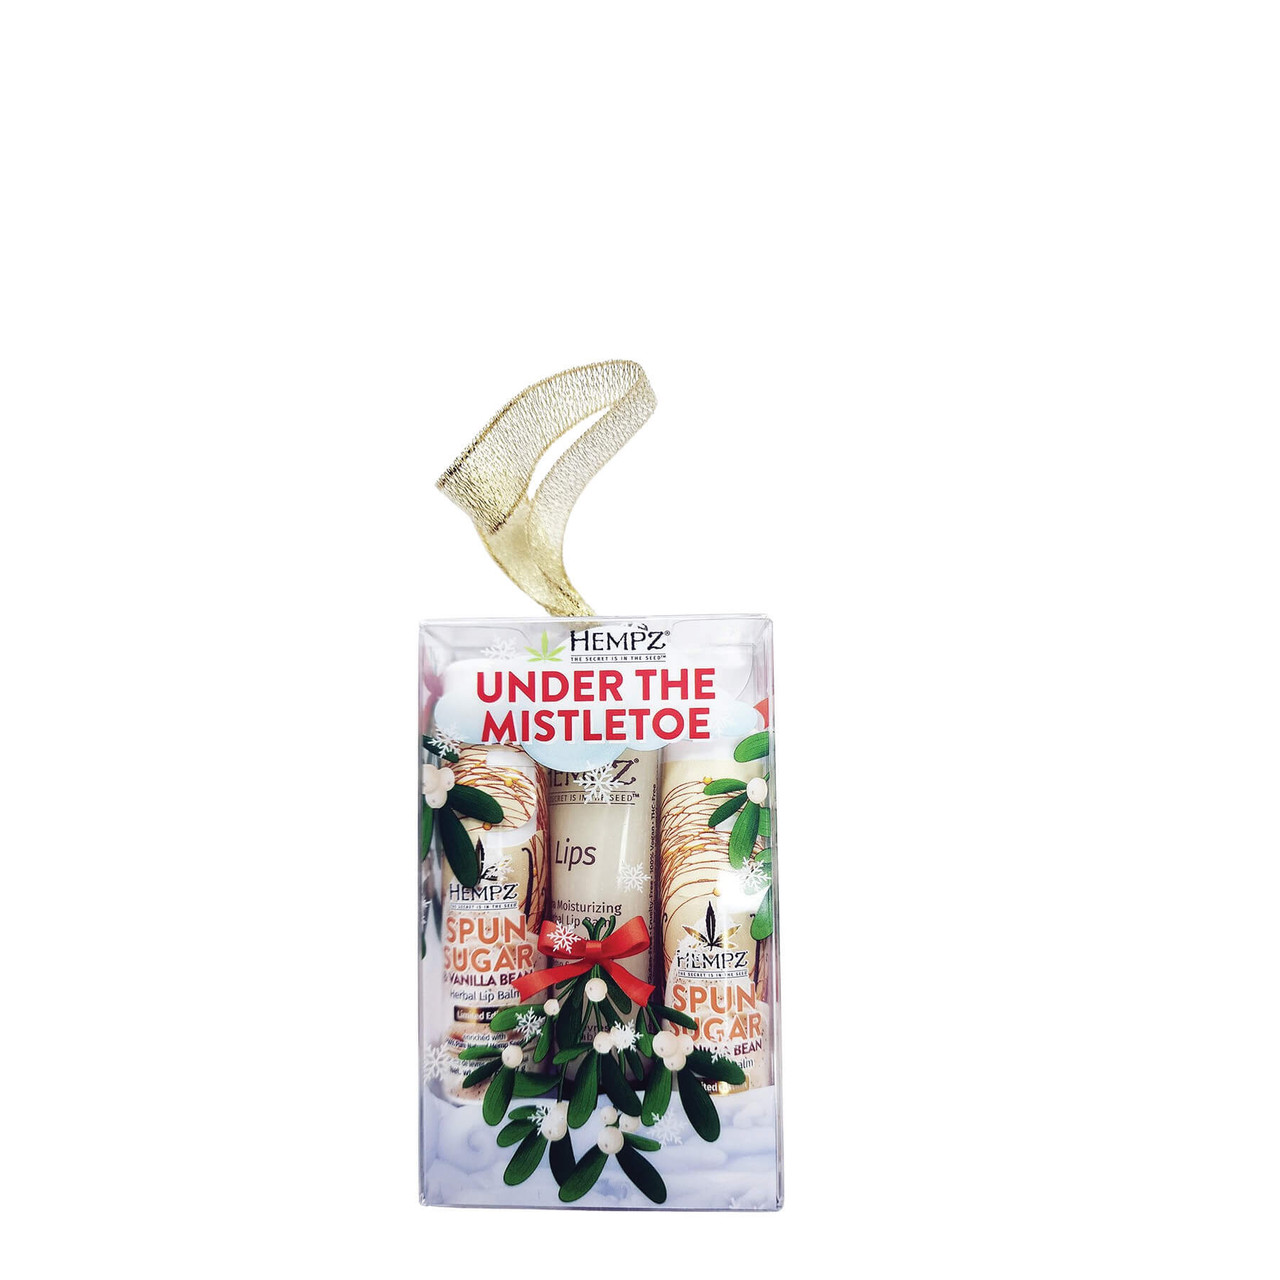 Hempz Holiday Under The Mistletoe 3pc Lip Balm Gift Set